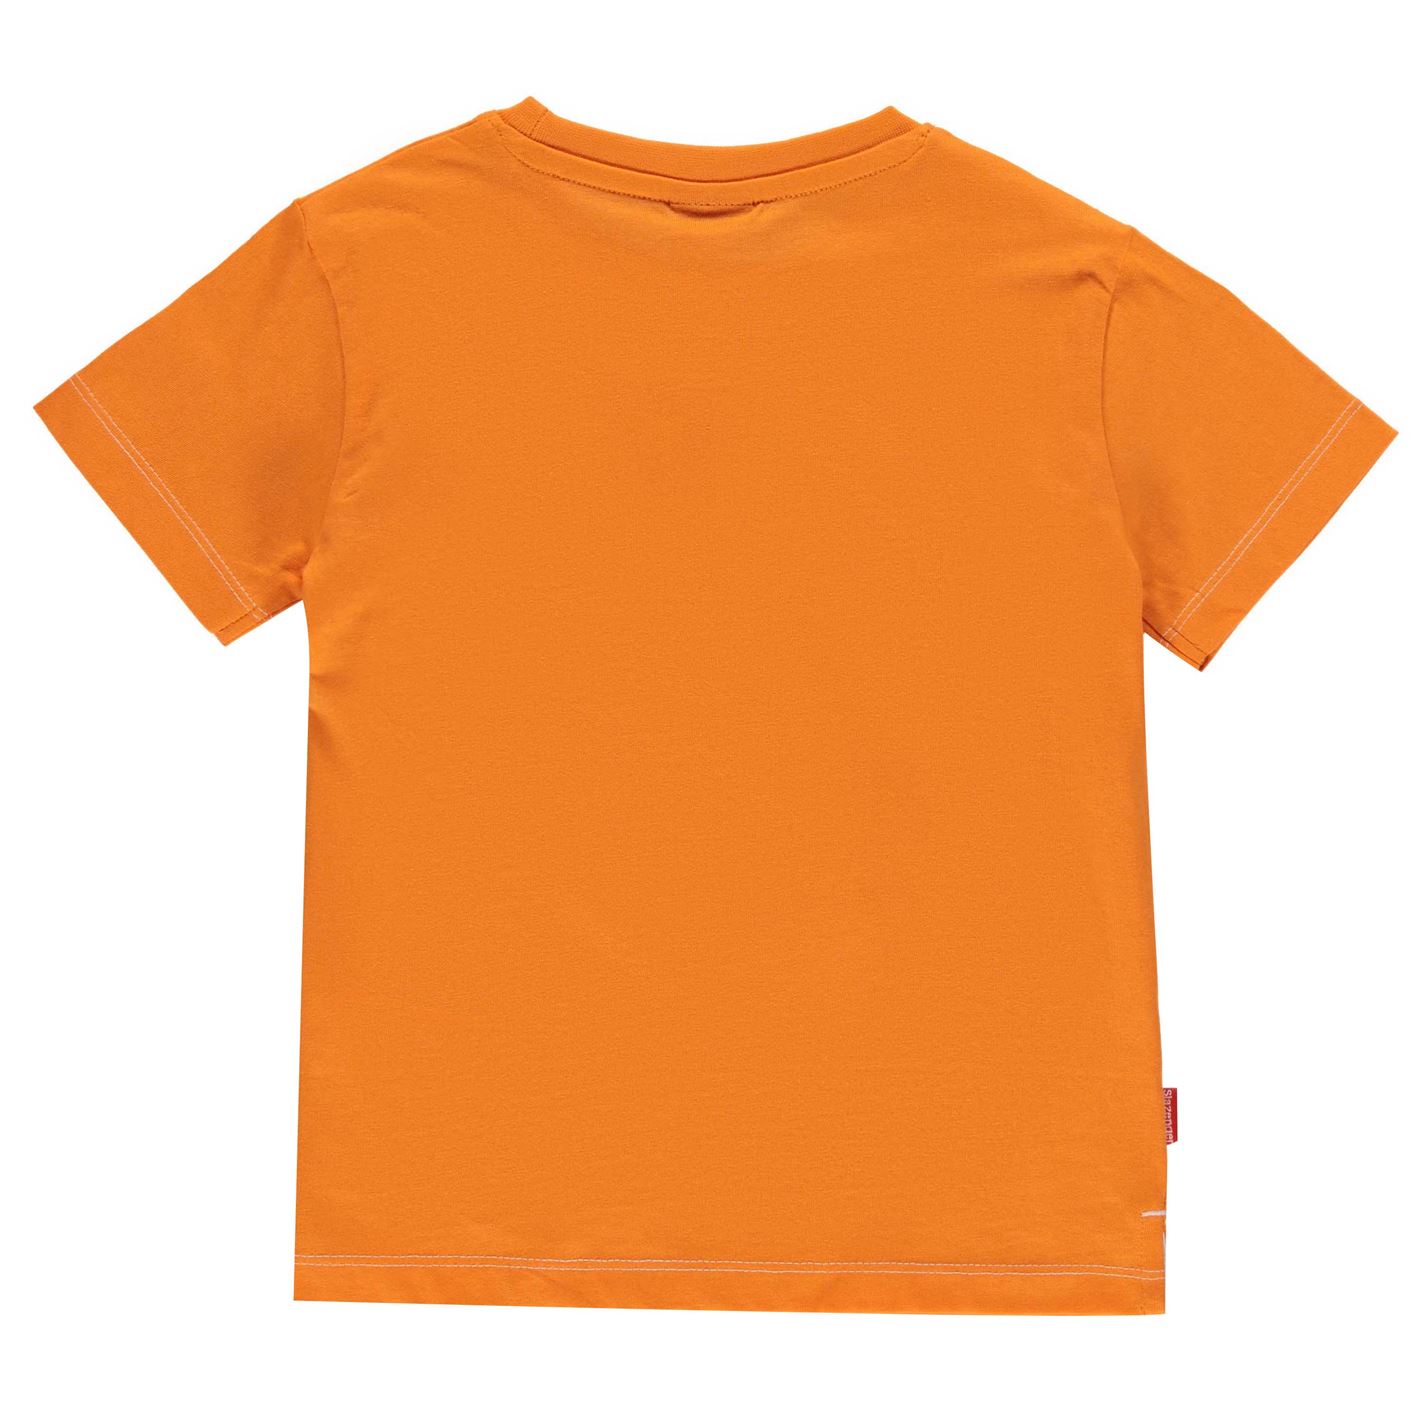 Slazenger Kids Plain T Shirt Tee Top Short Sleeve Casual Crew Neck ...